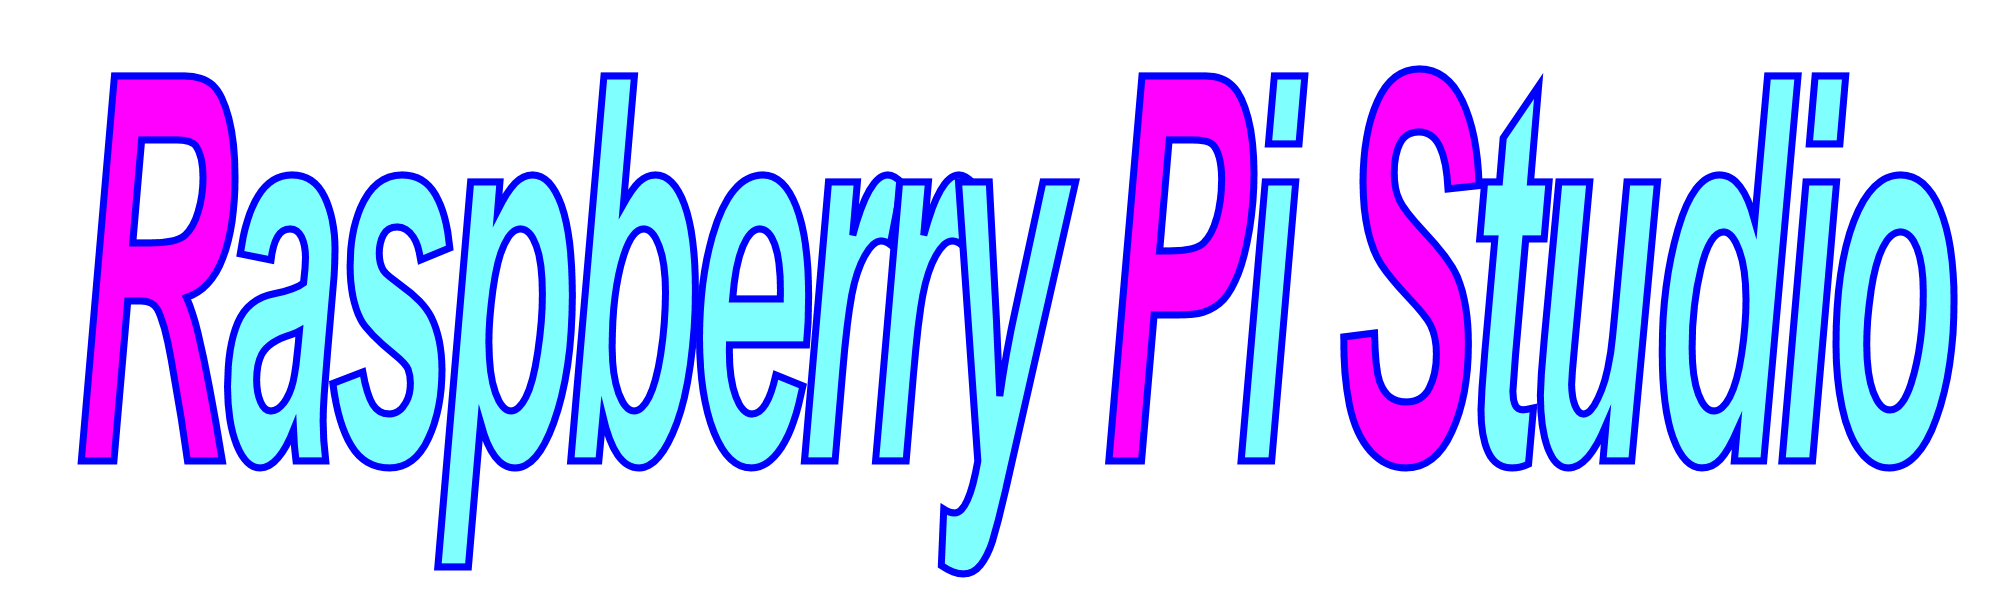 Raspberry Pi の楽しみ